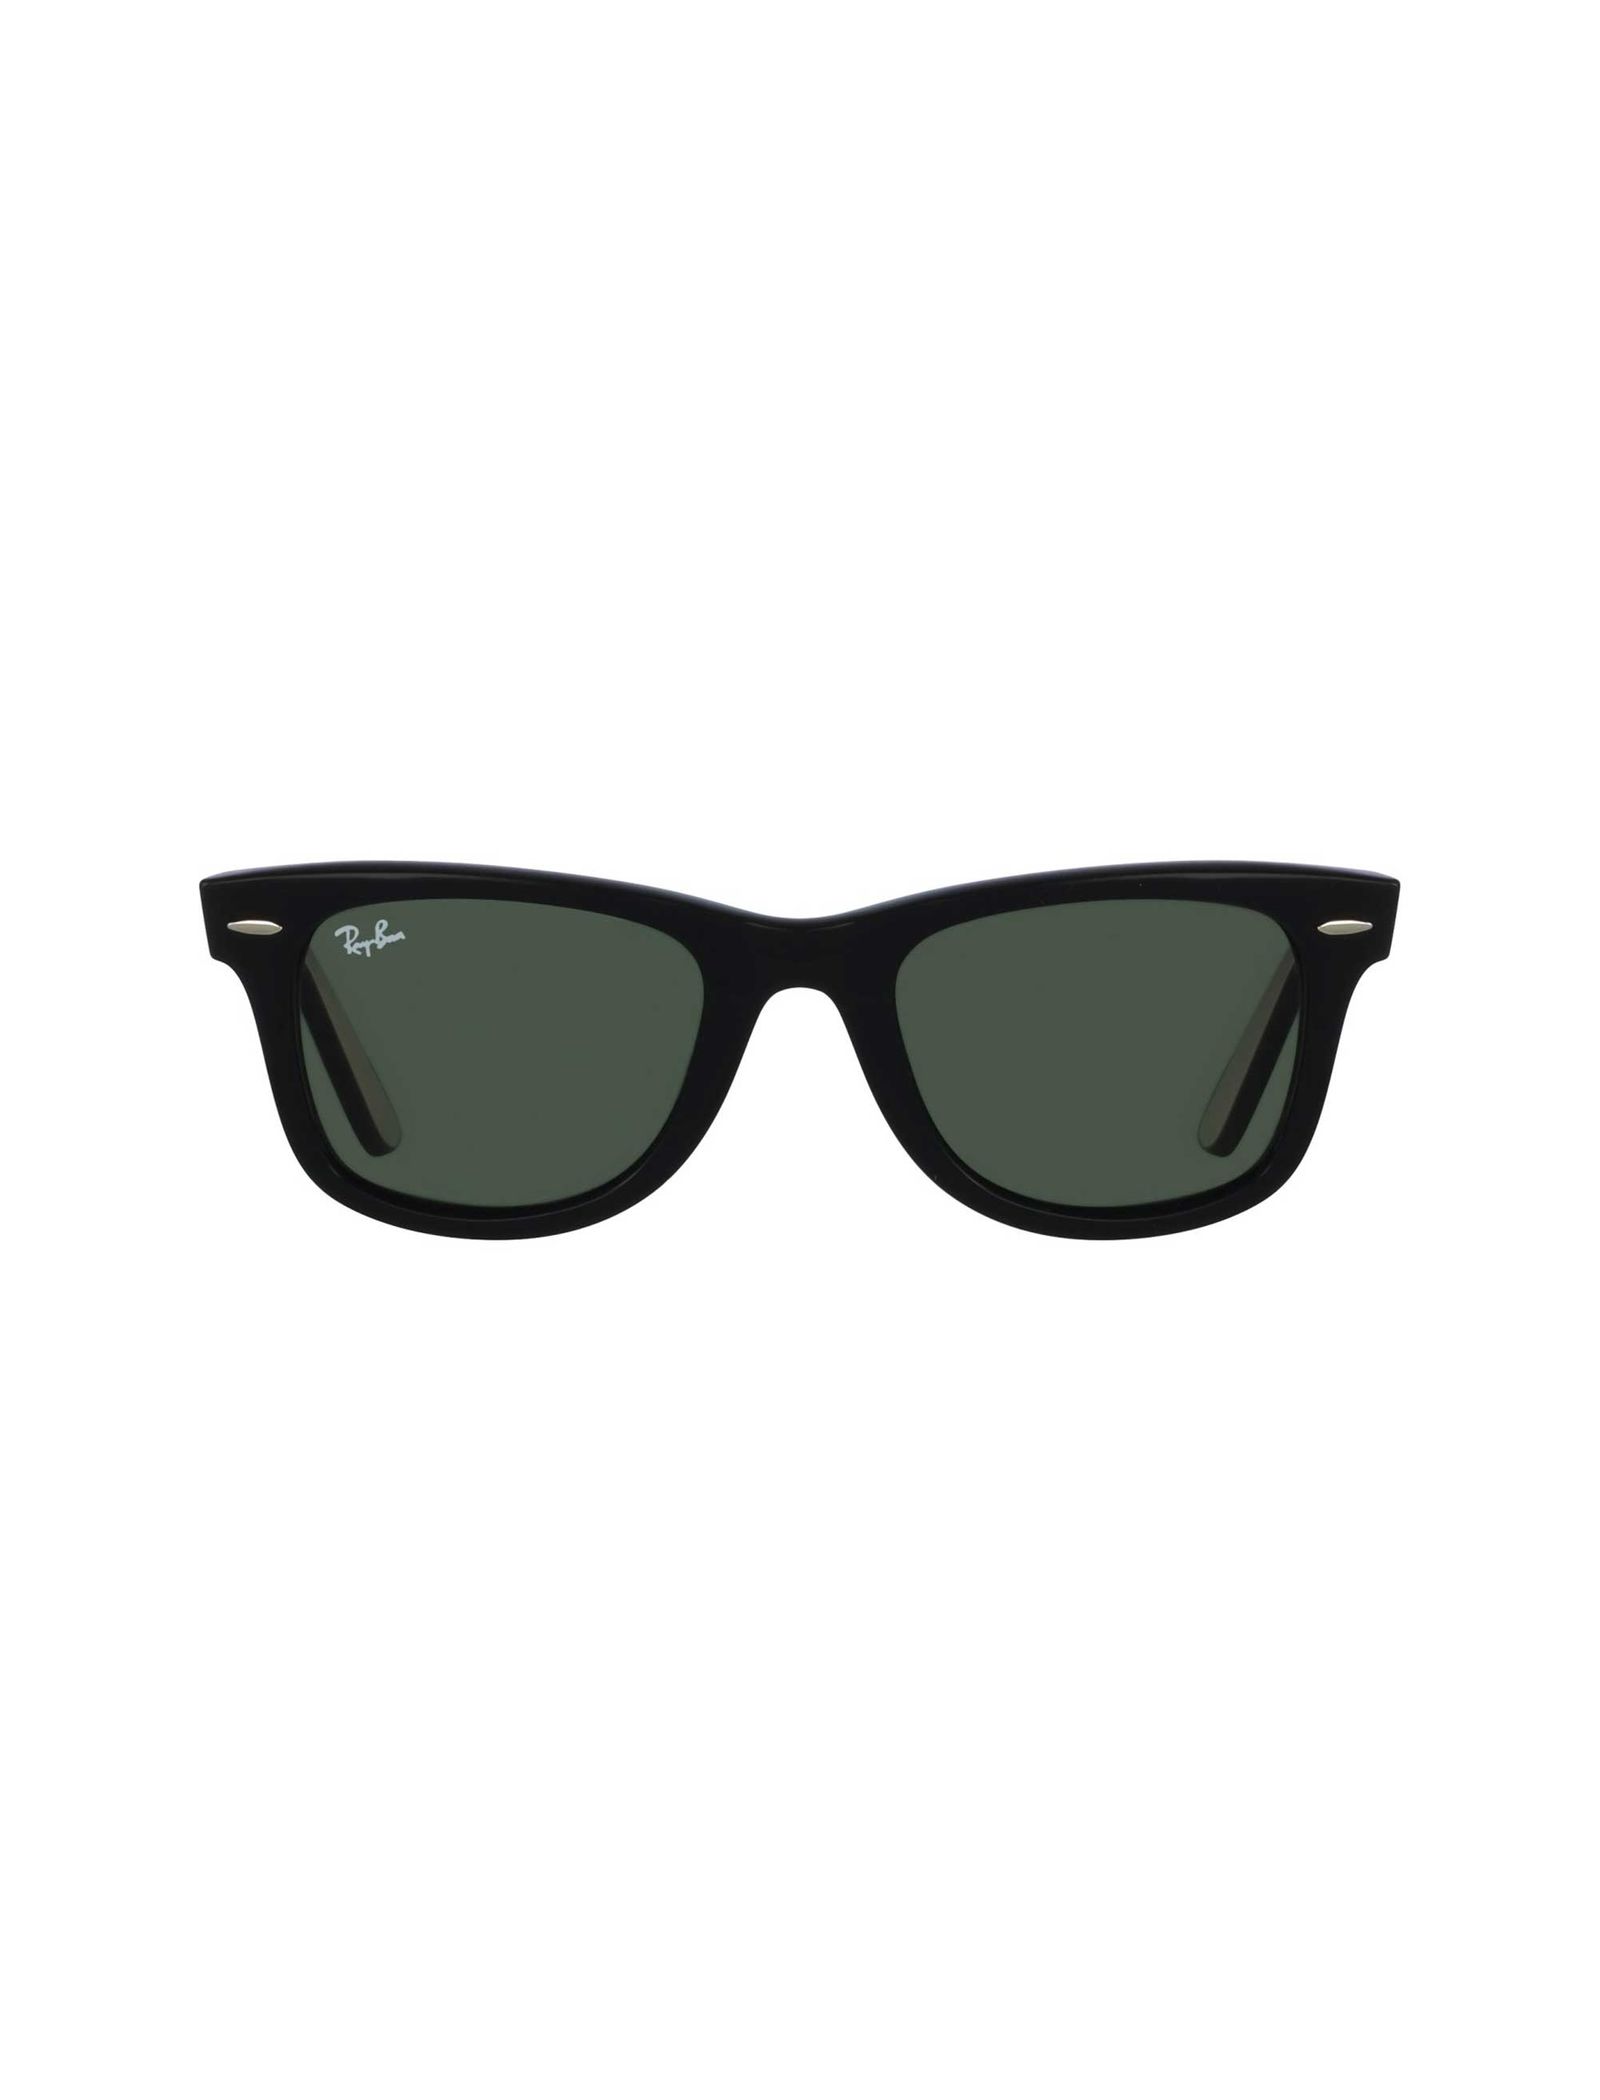 عینک آفتابی ری بن مدل 2140-901/58-52 - مشکی - 2